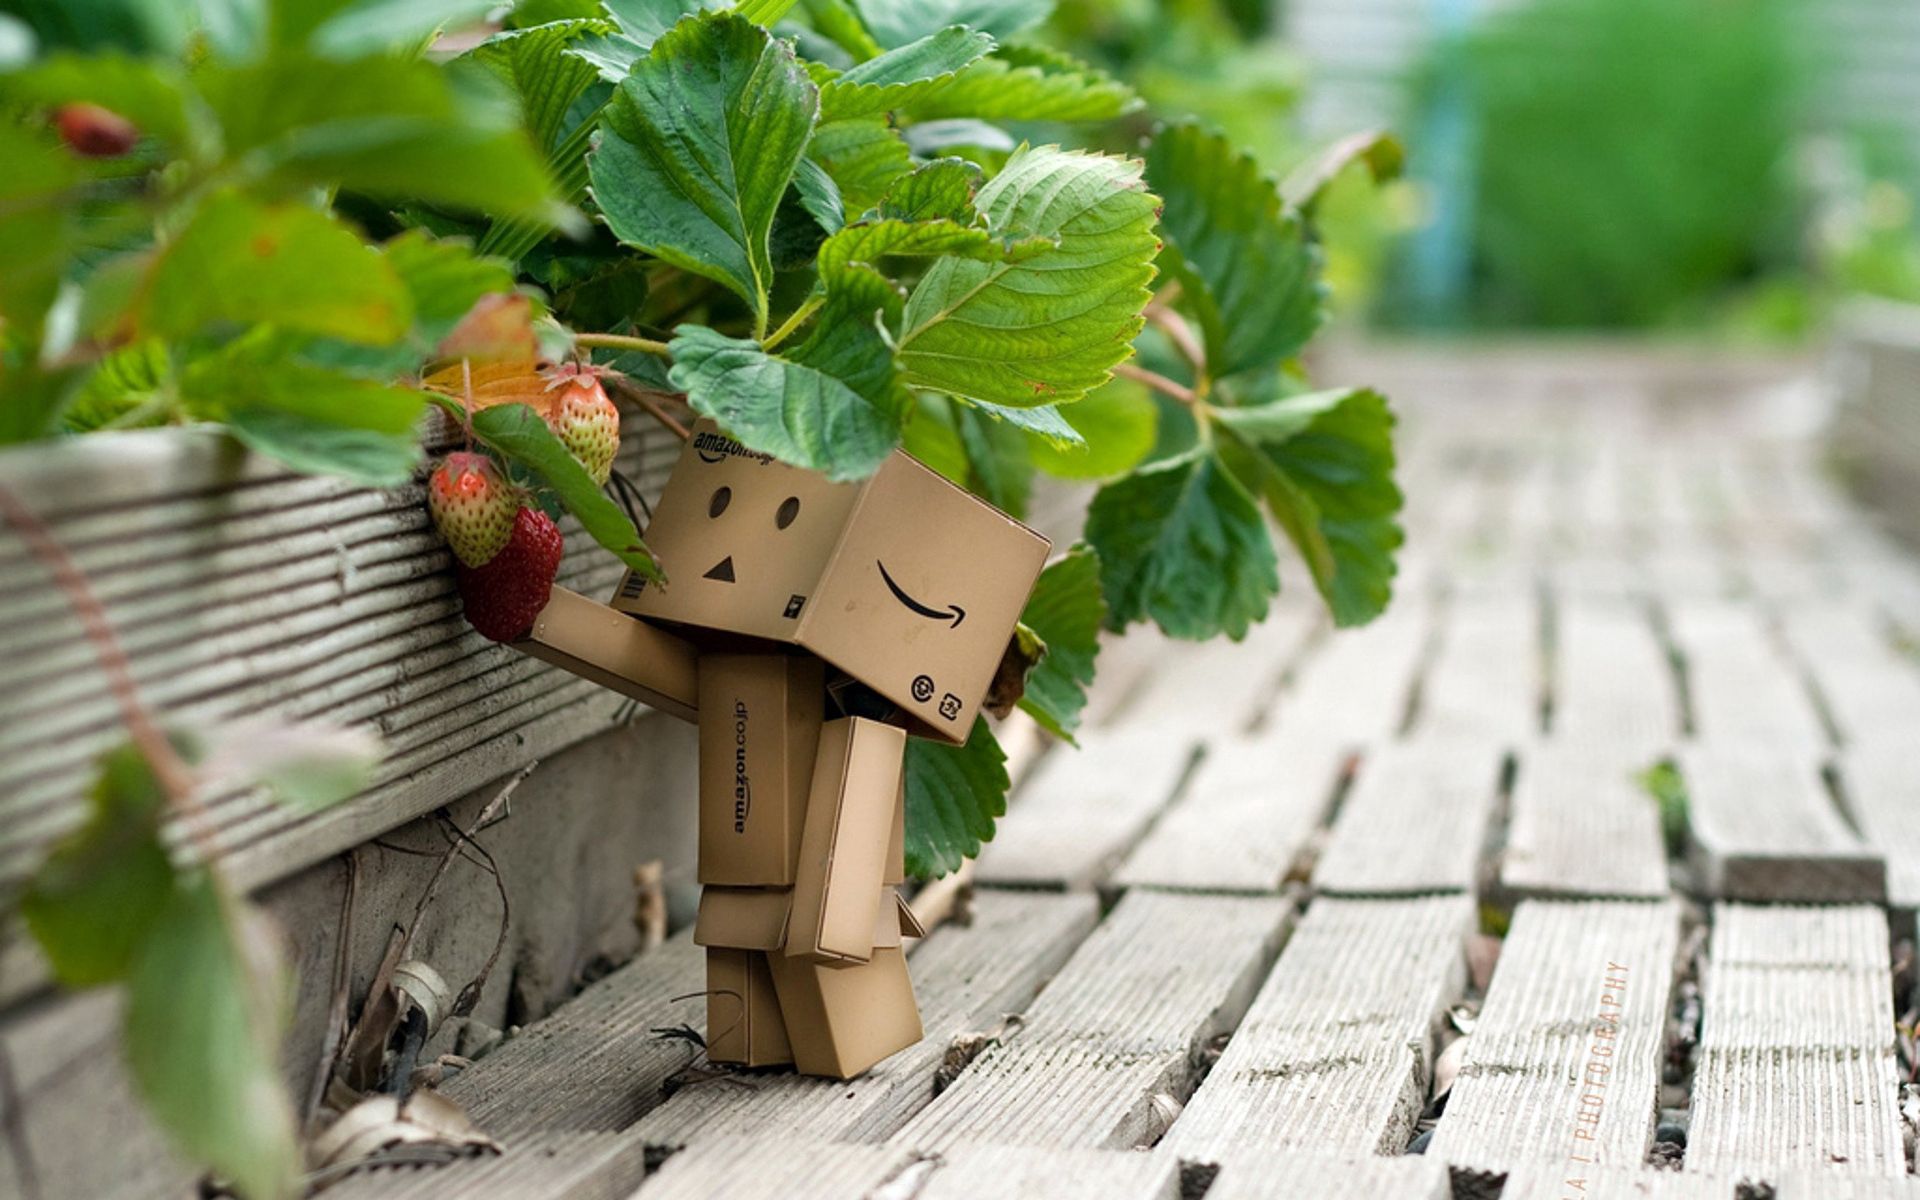 miscellanea, strawberry, grass, miscellaneous, berry, stroll, cardboard robot, wild strawberries, danboard